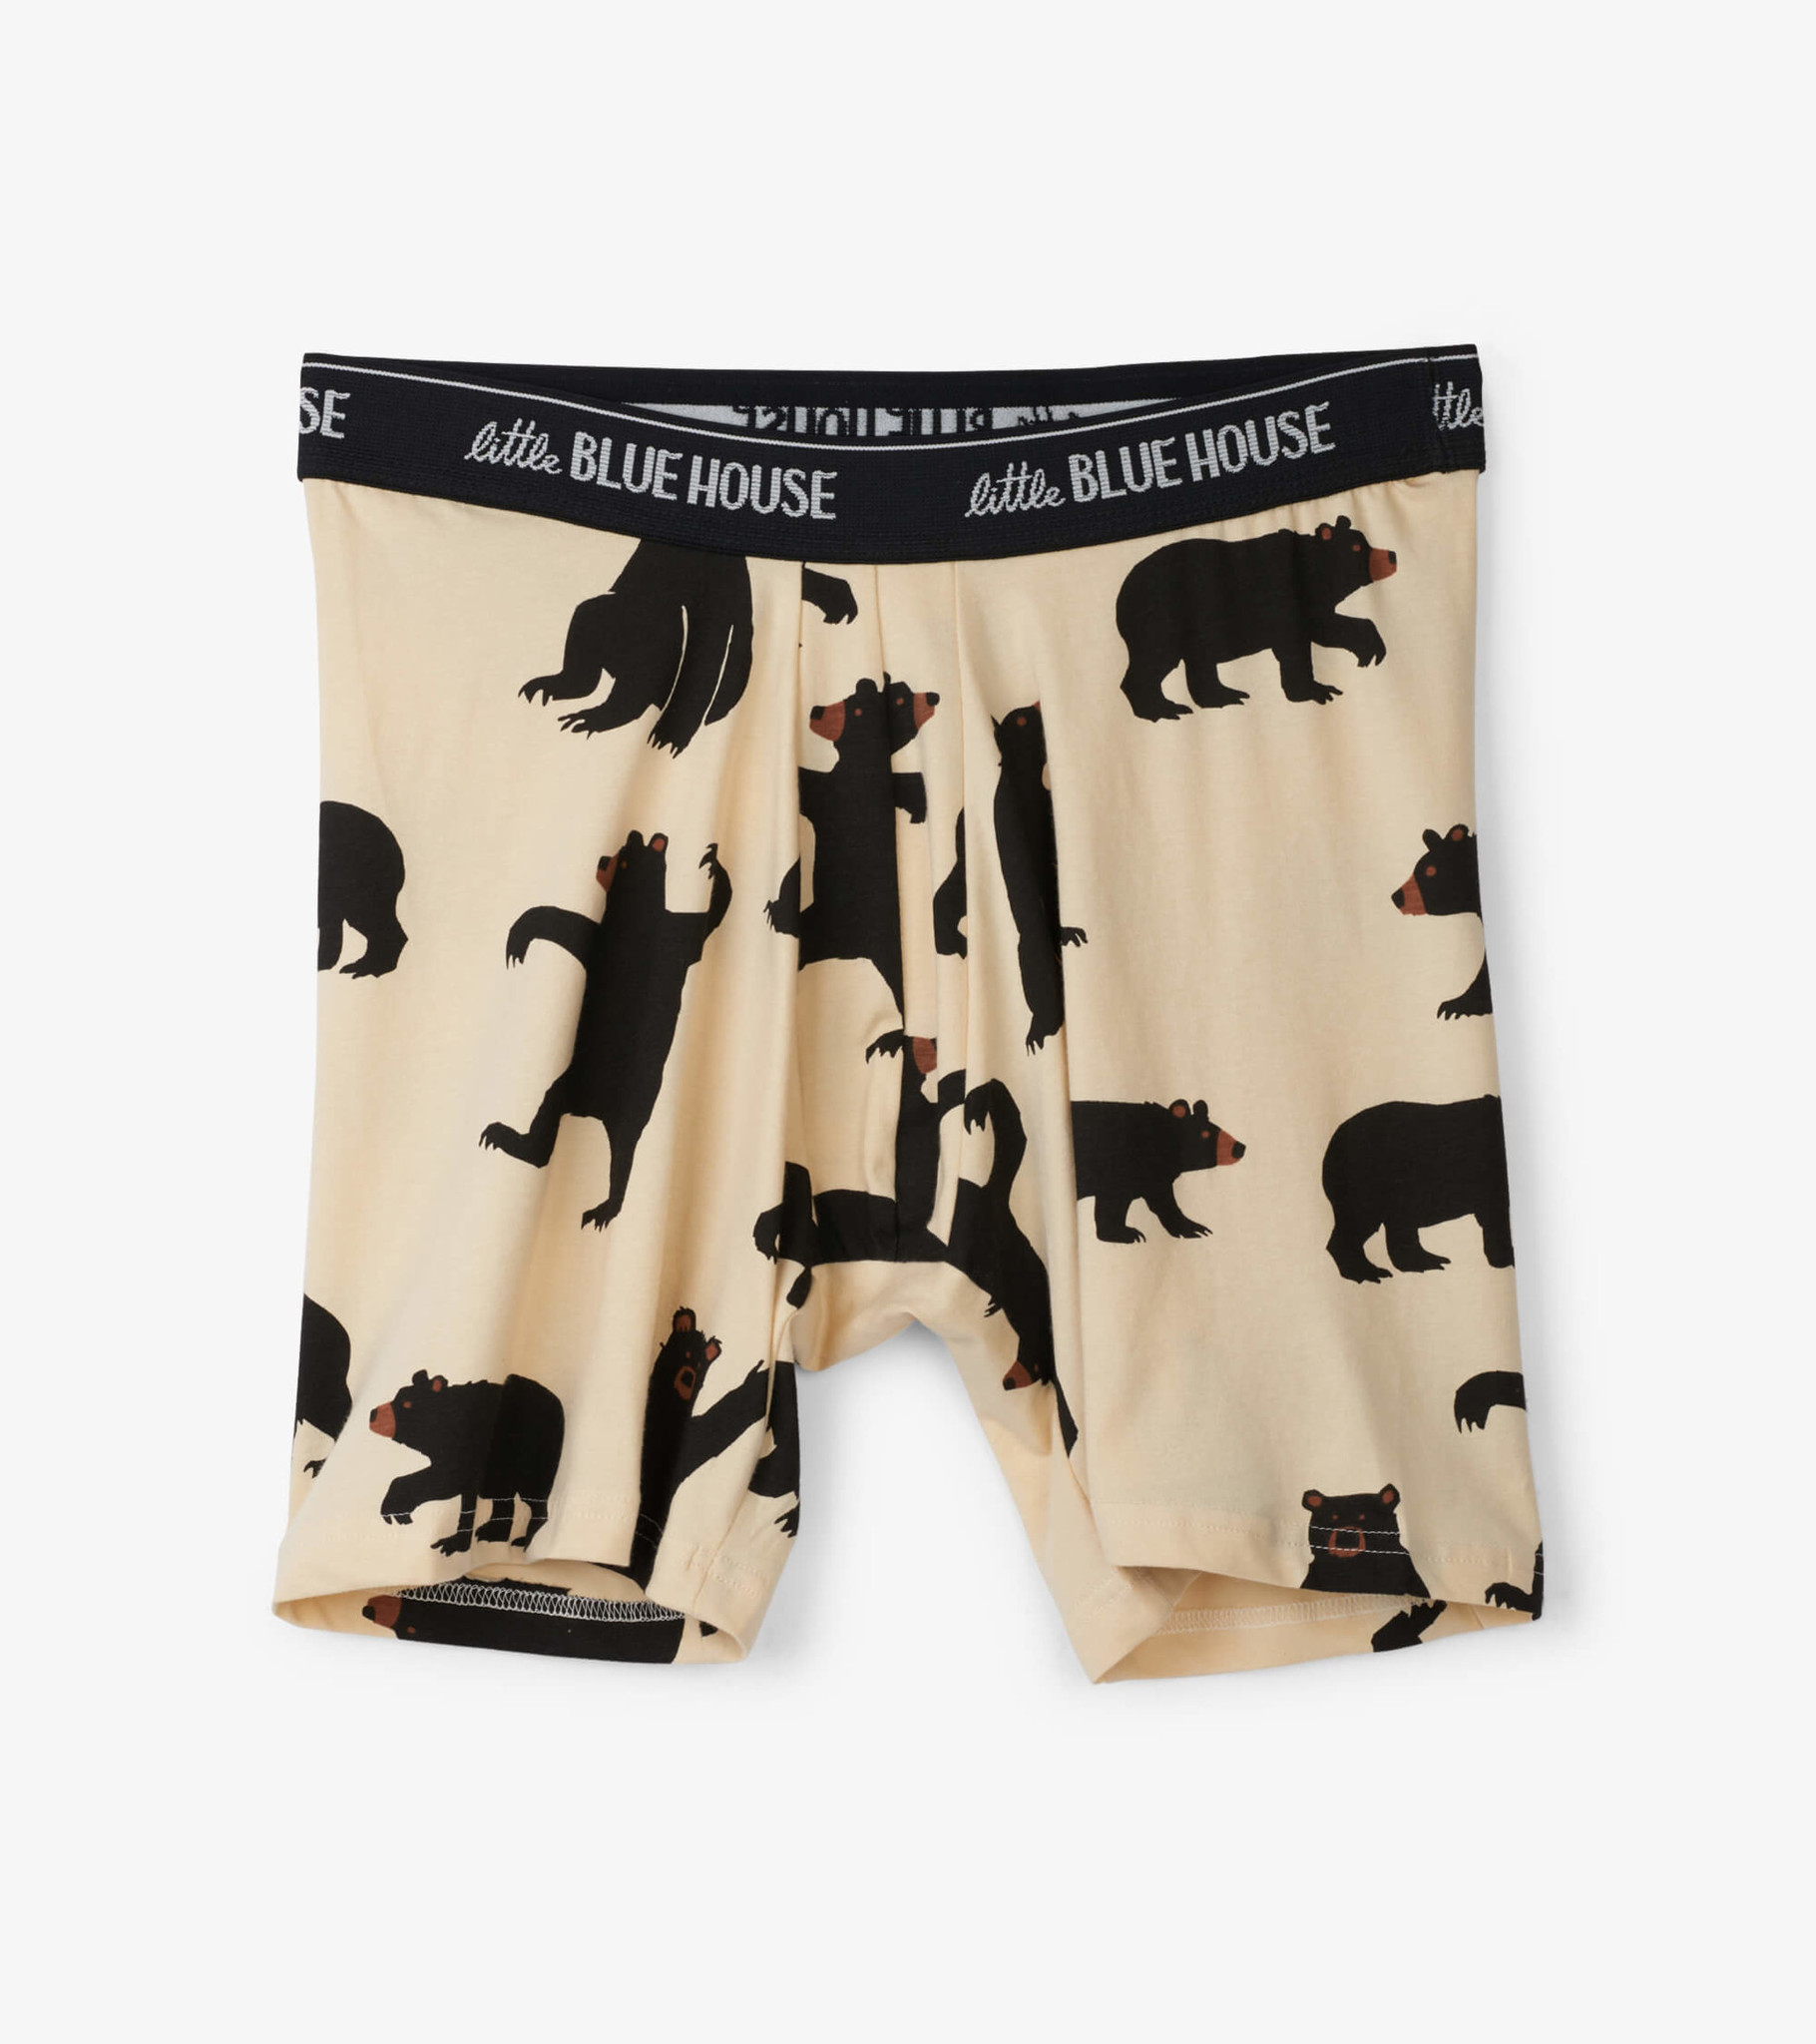 The Bear Boxers Custom Photo Boxers Men's Underwear Classic Slate